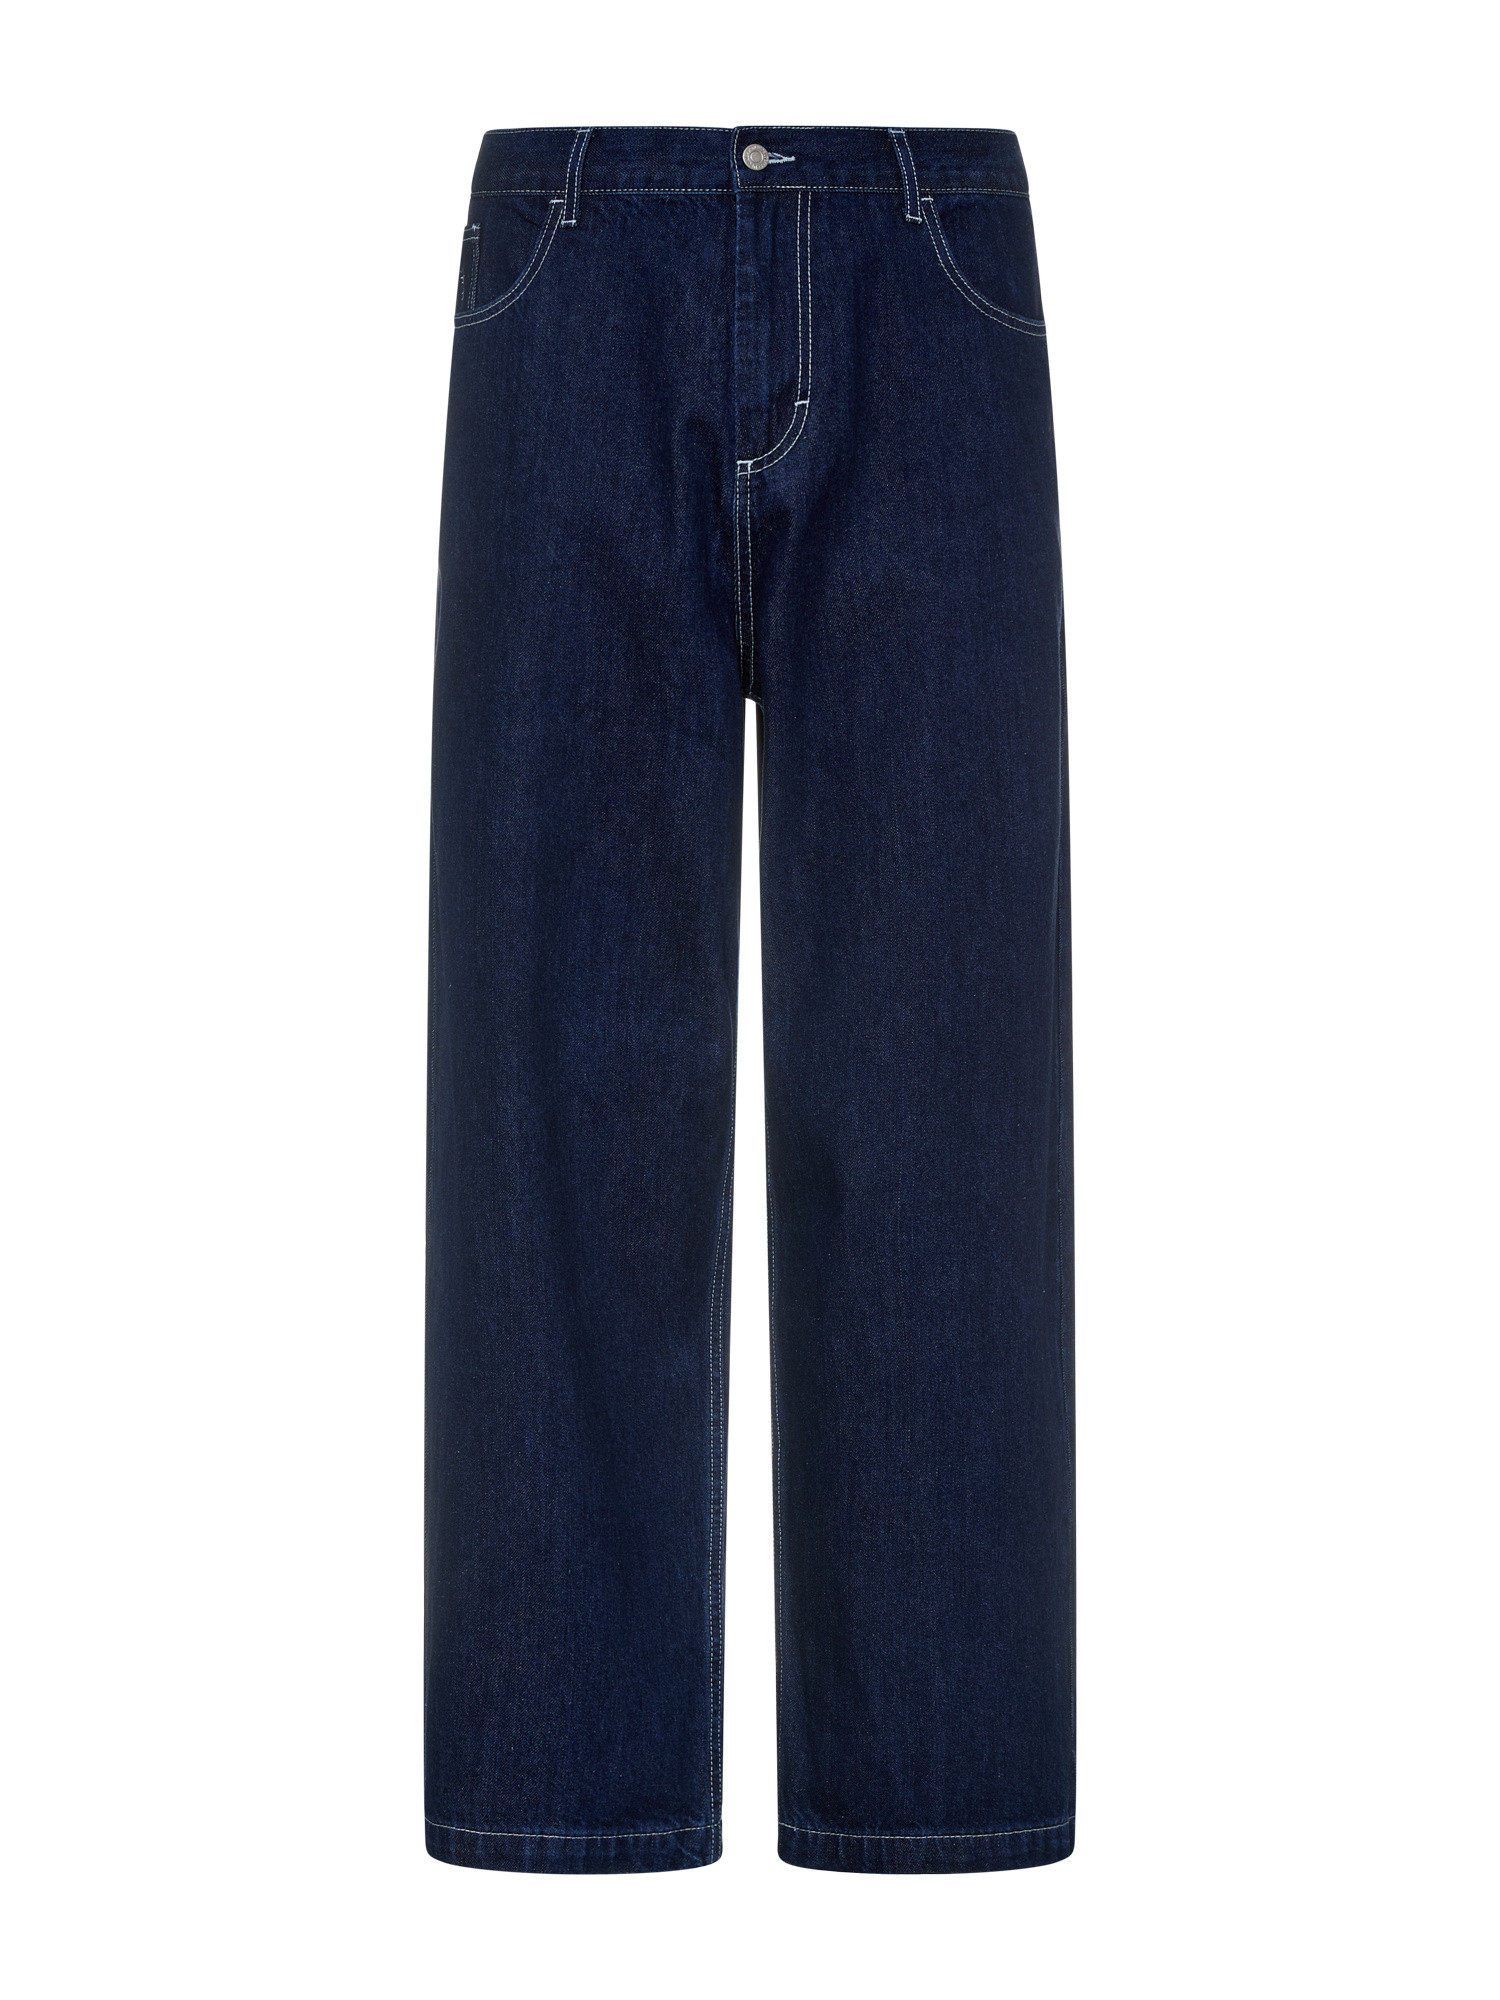 Usual - Pantaloni Denim Giga, Blu scuro, large image number 0